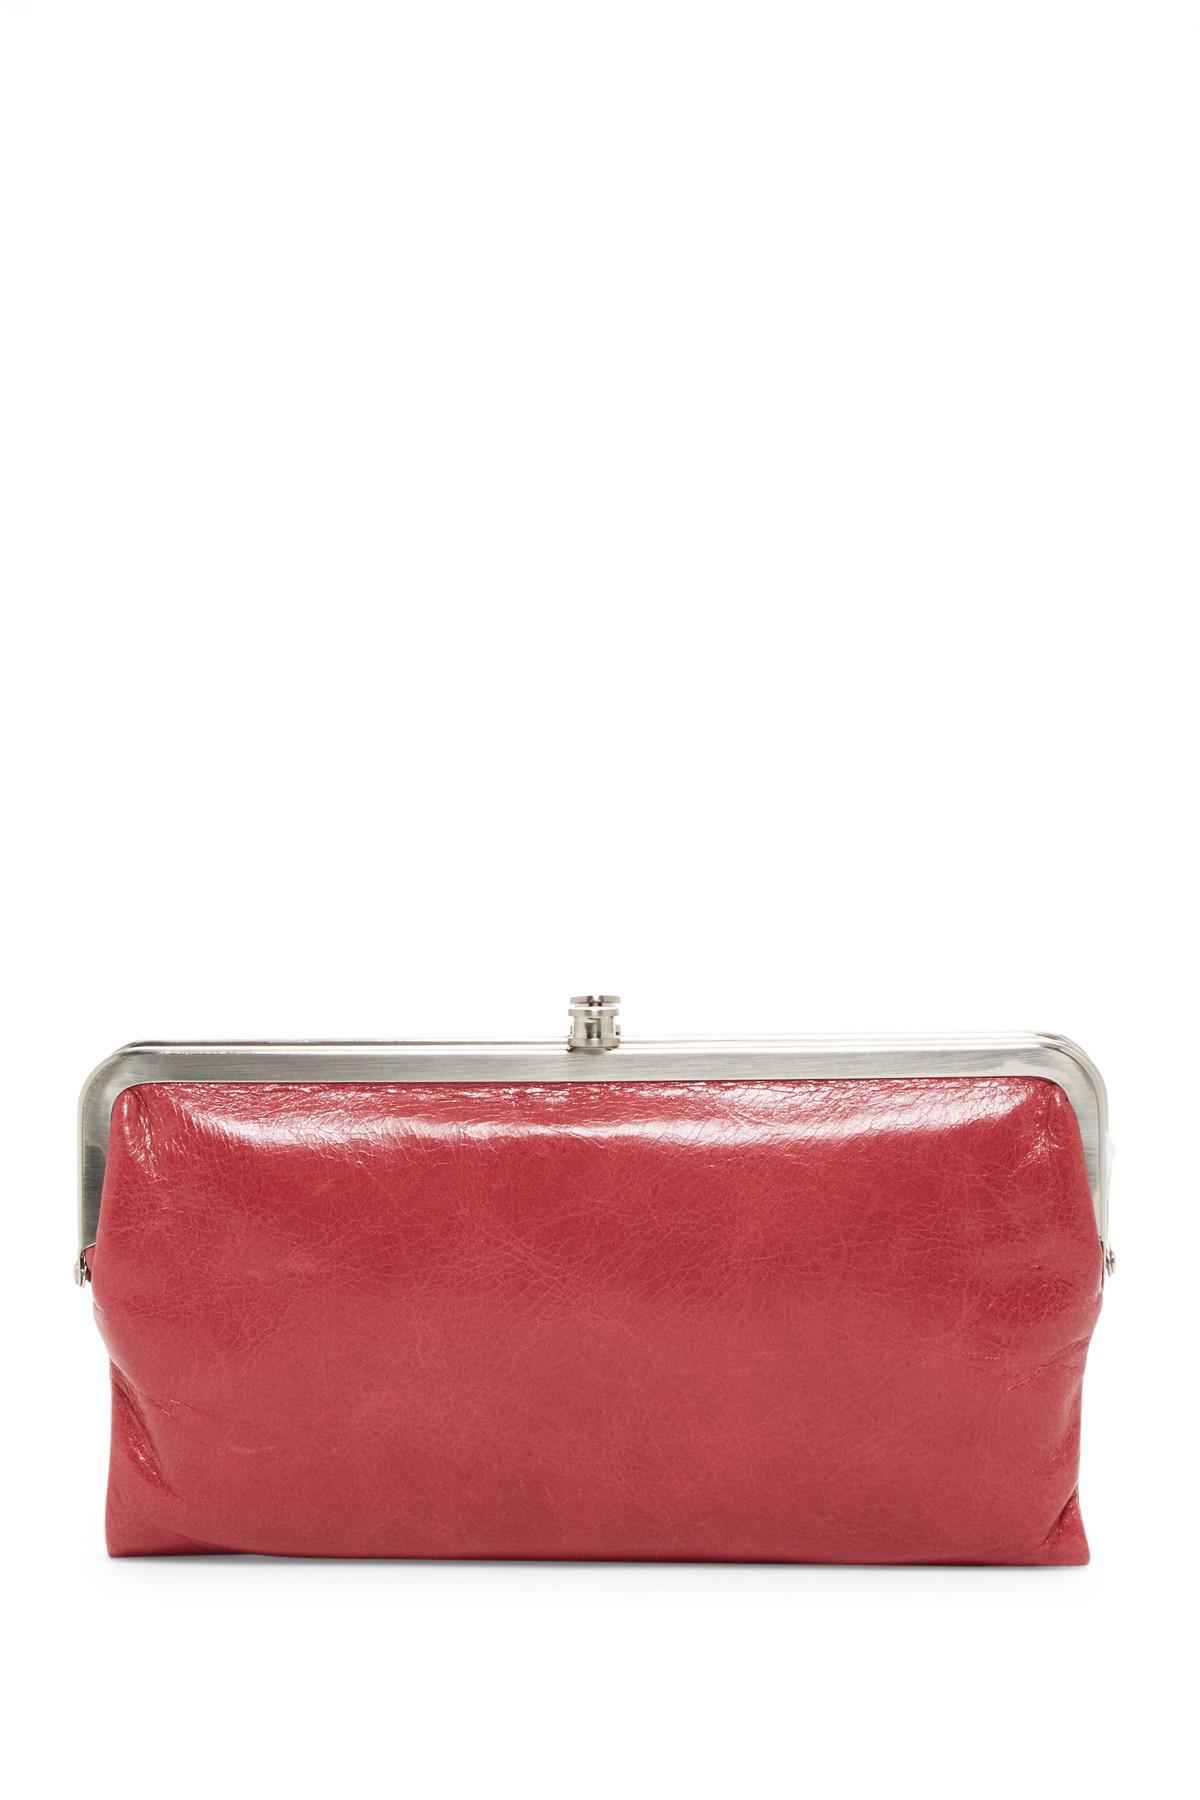 Lyst - Hobo Lauren Leather Wallet in Red